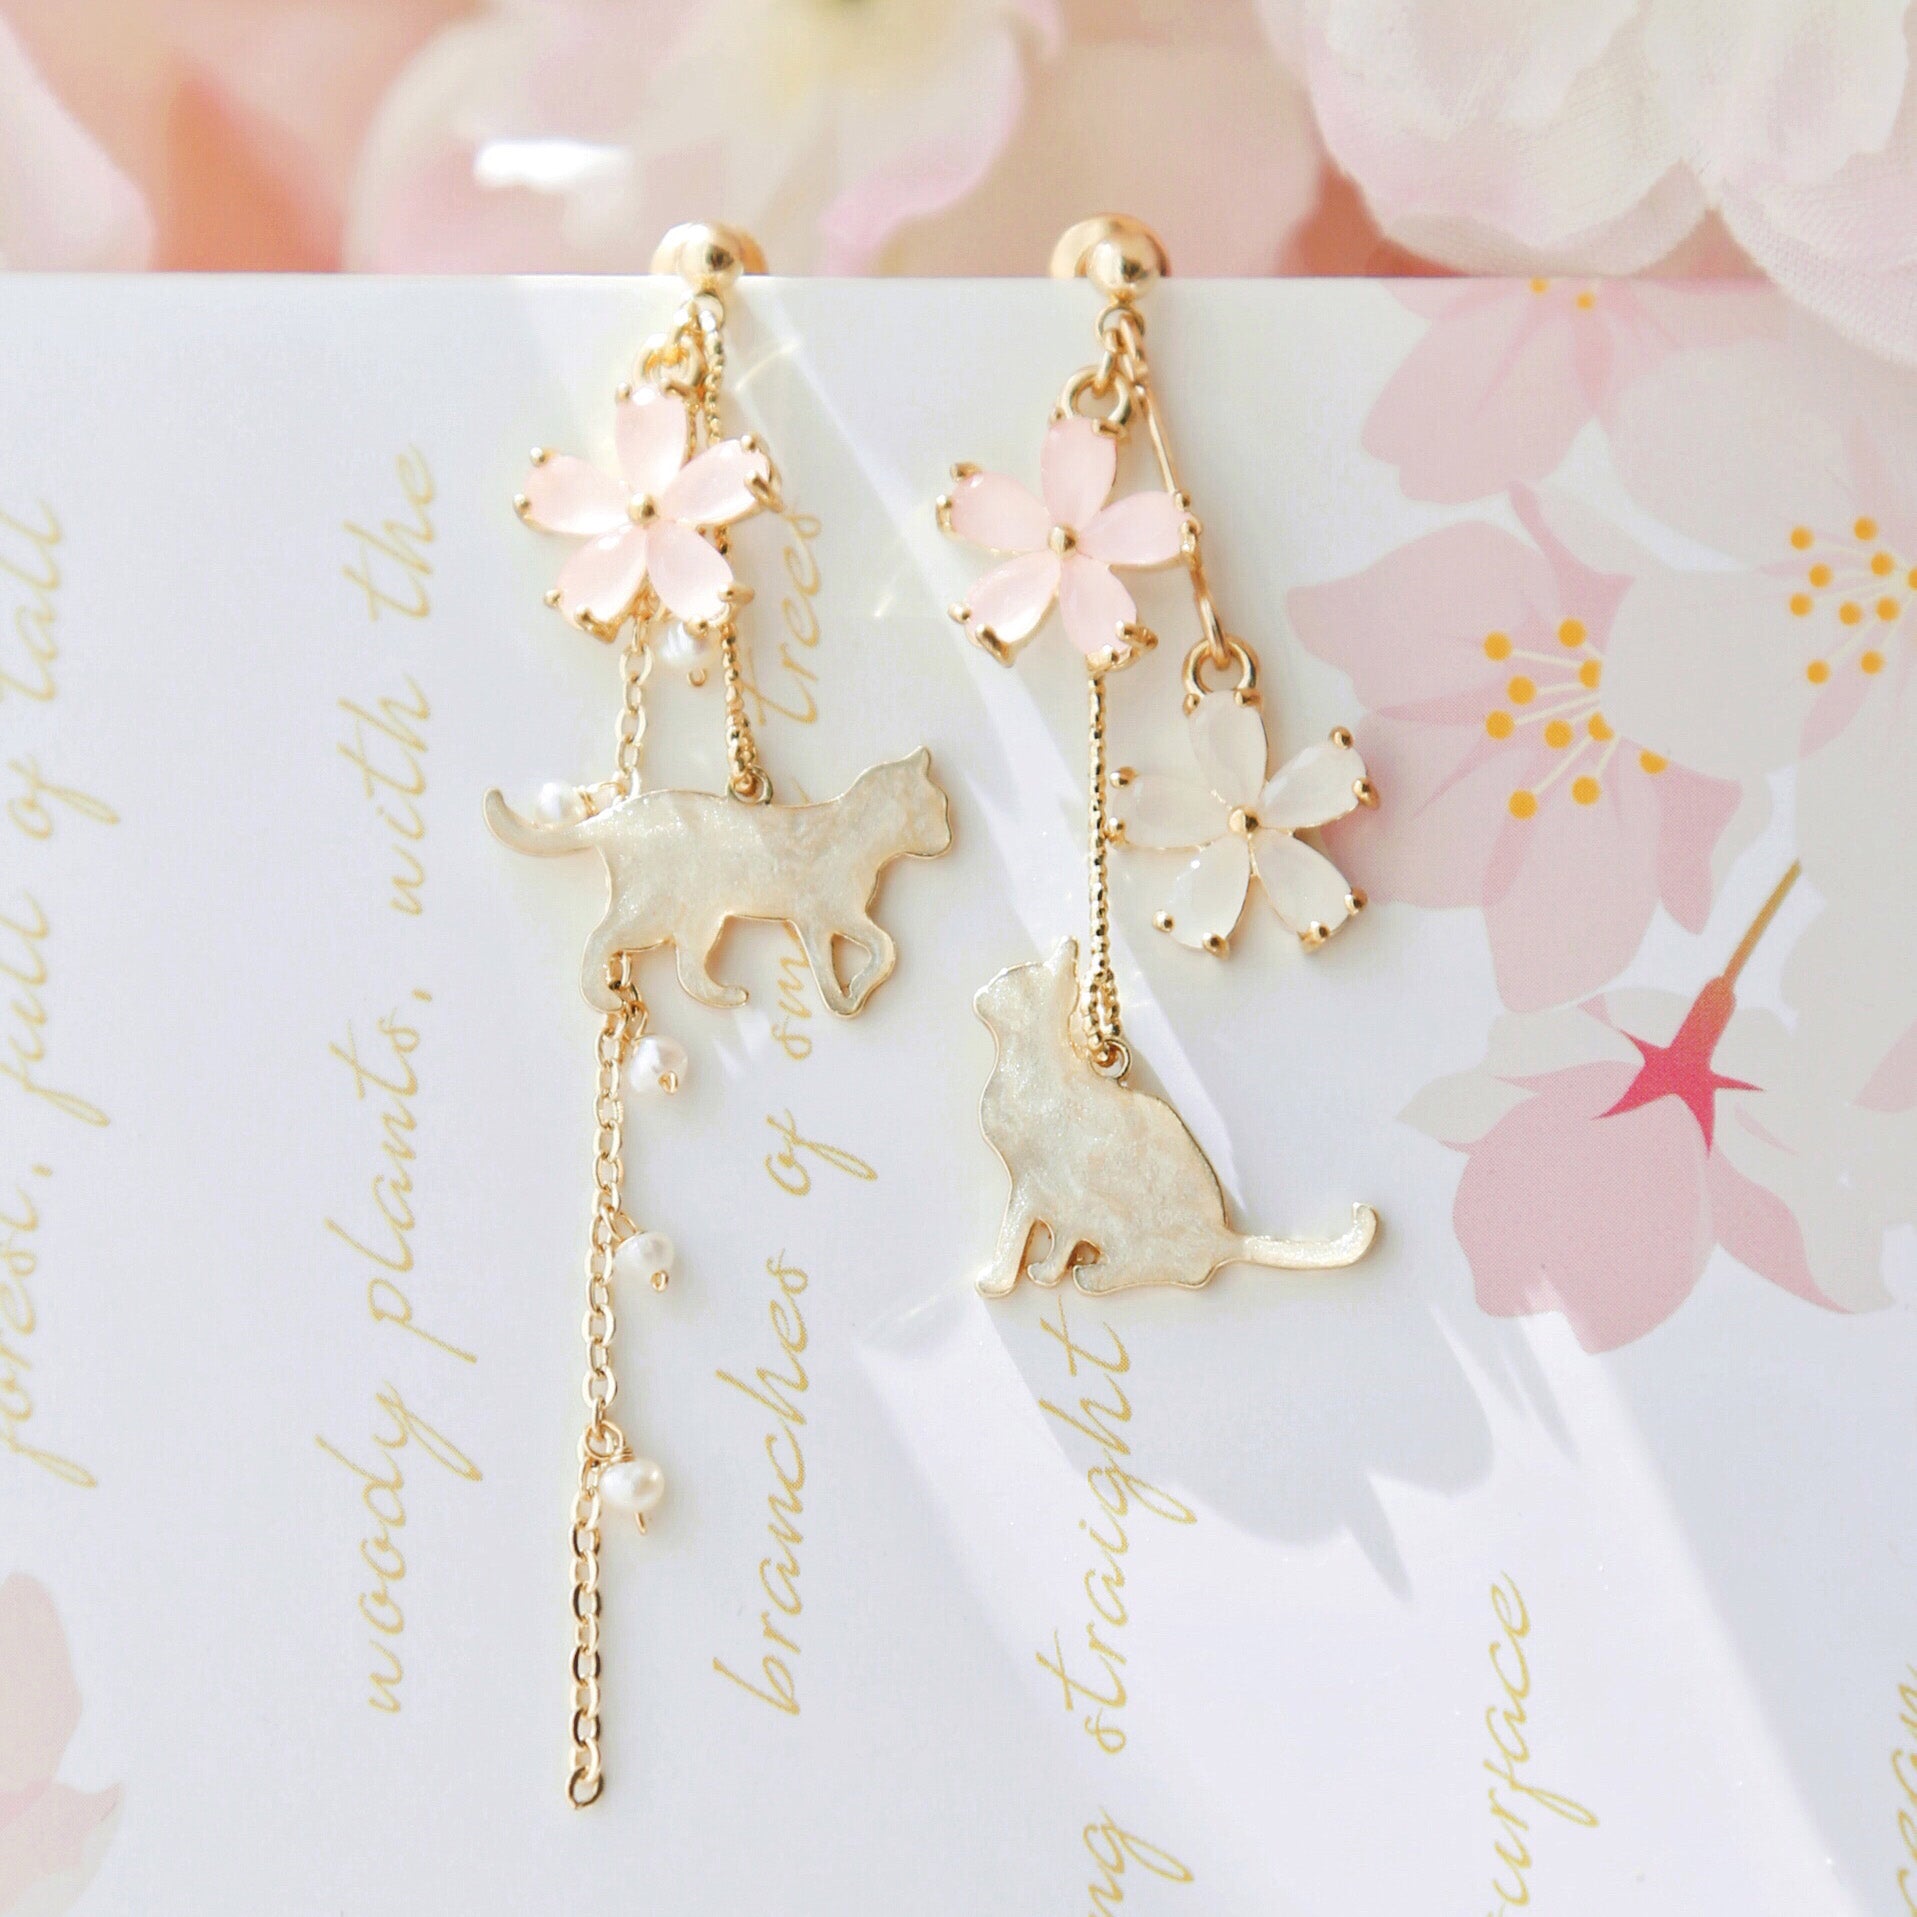 Asymmetric Sakura and Kitty Handmade Earrings